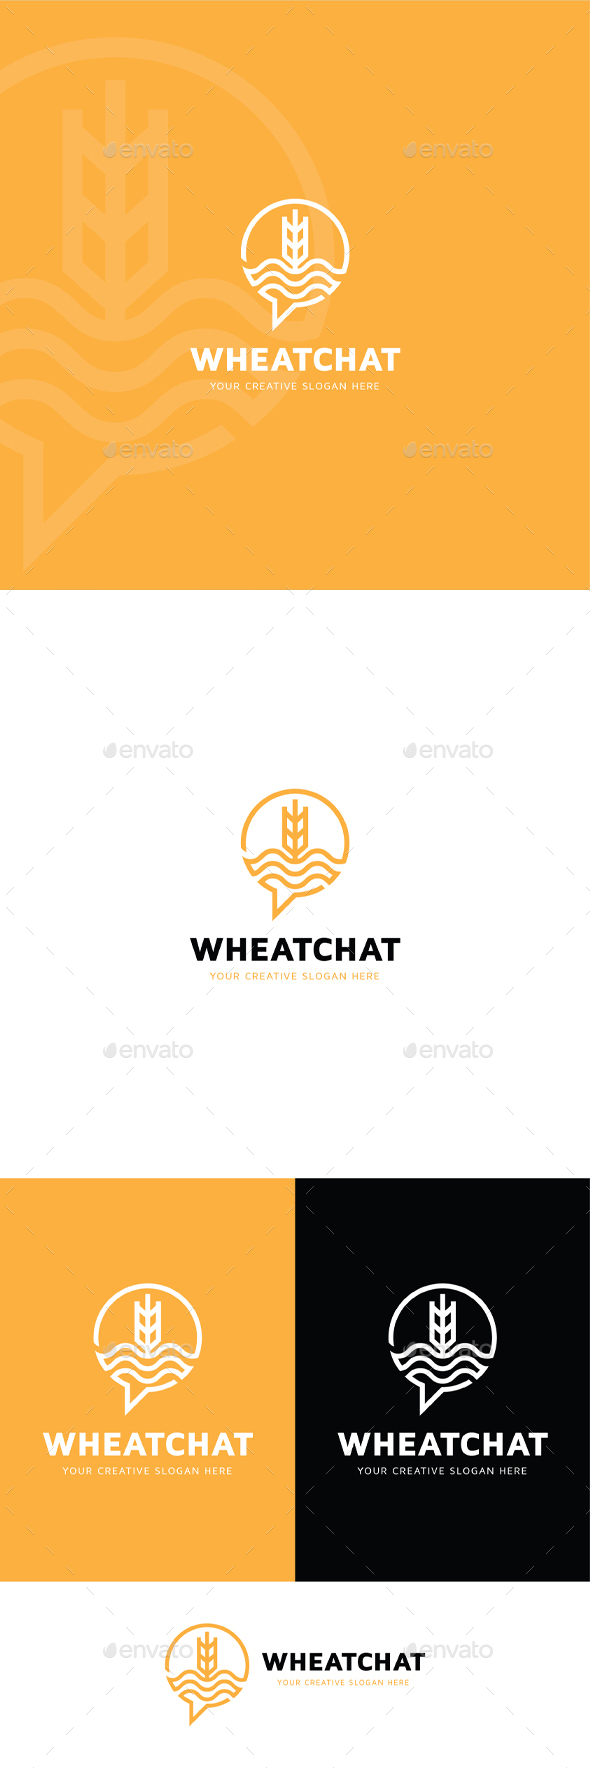 Wheat Chat Logo